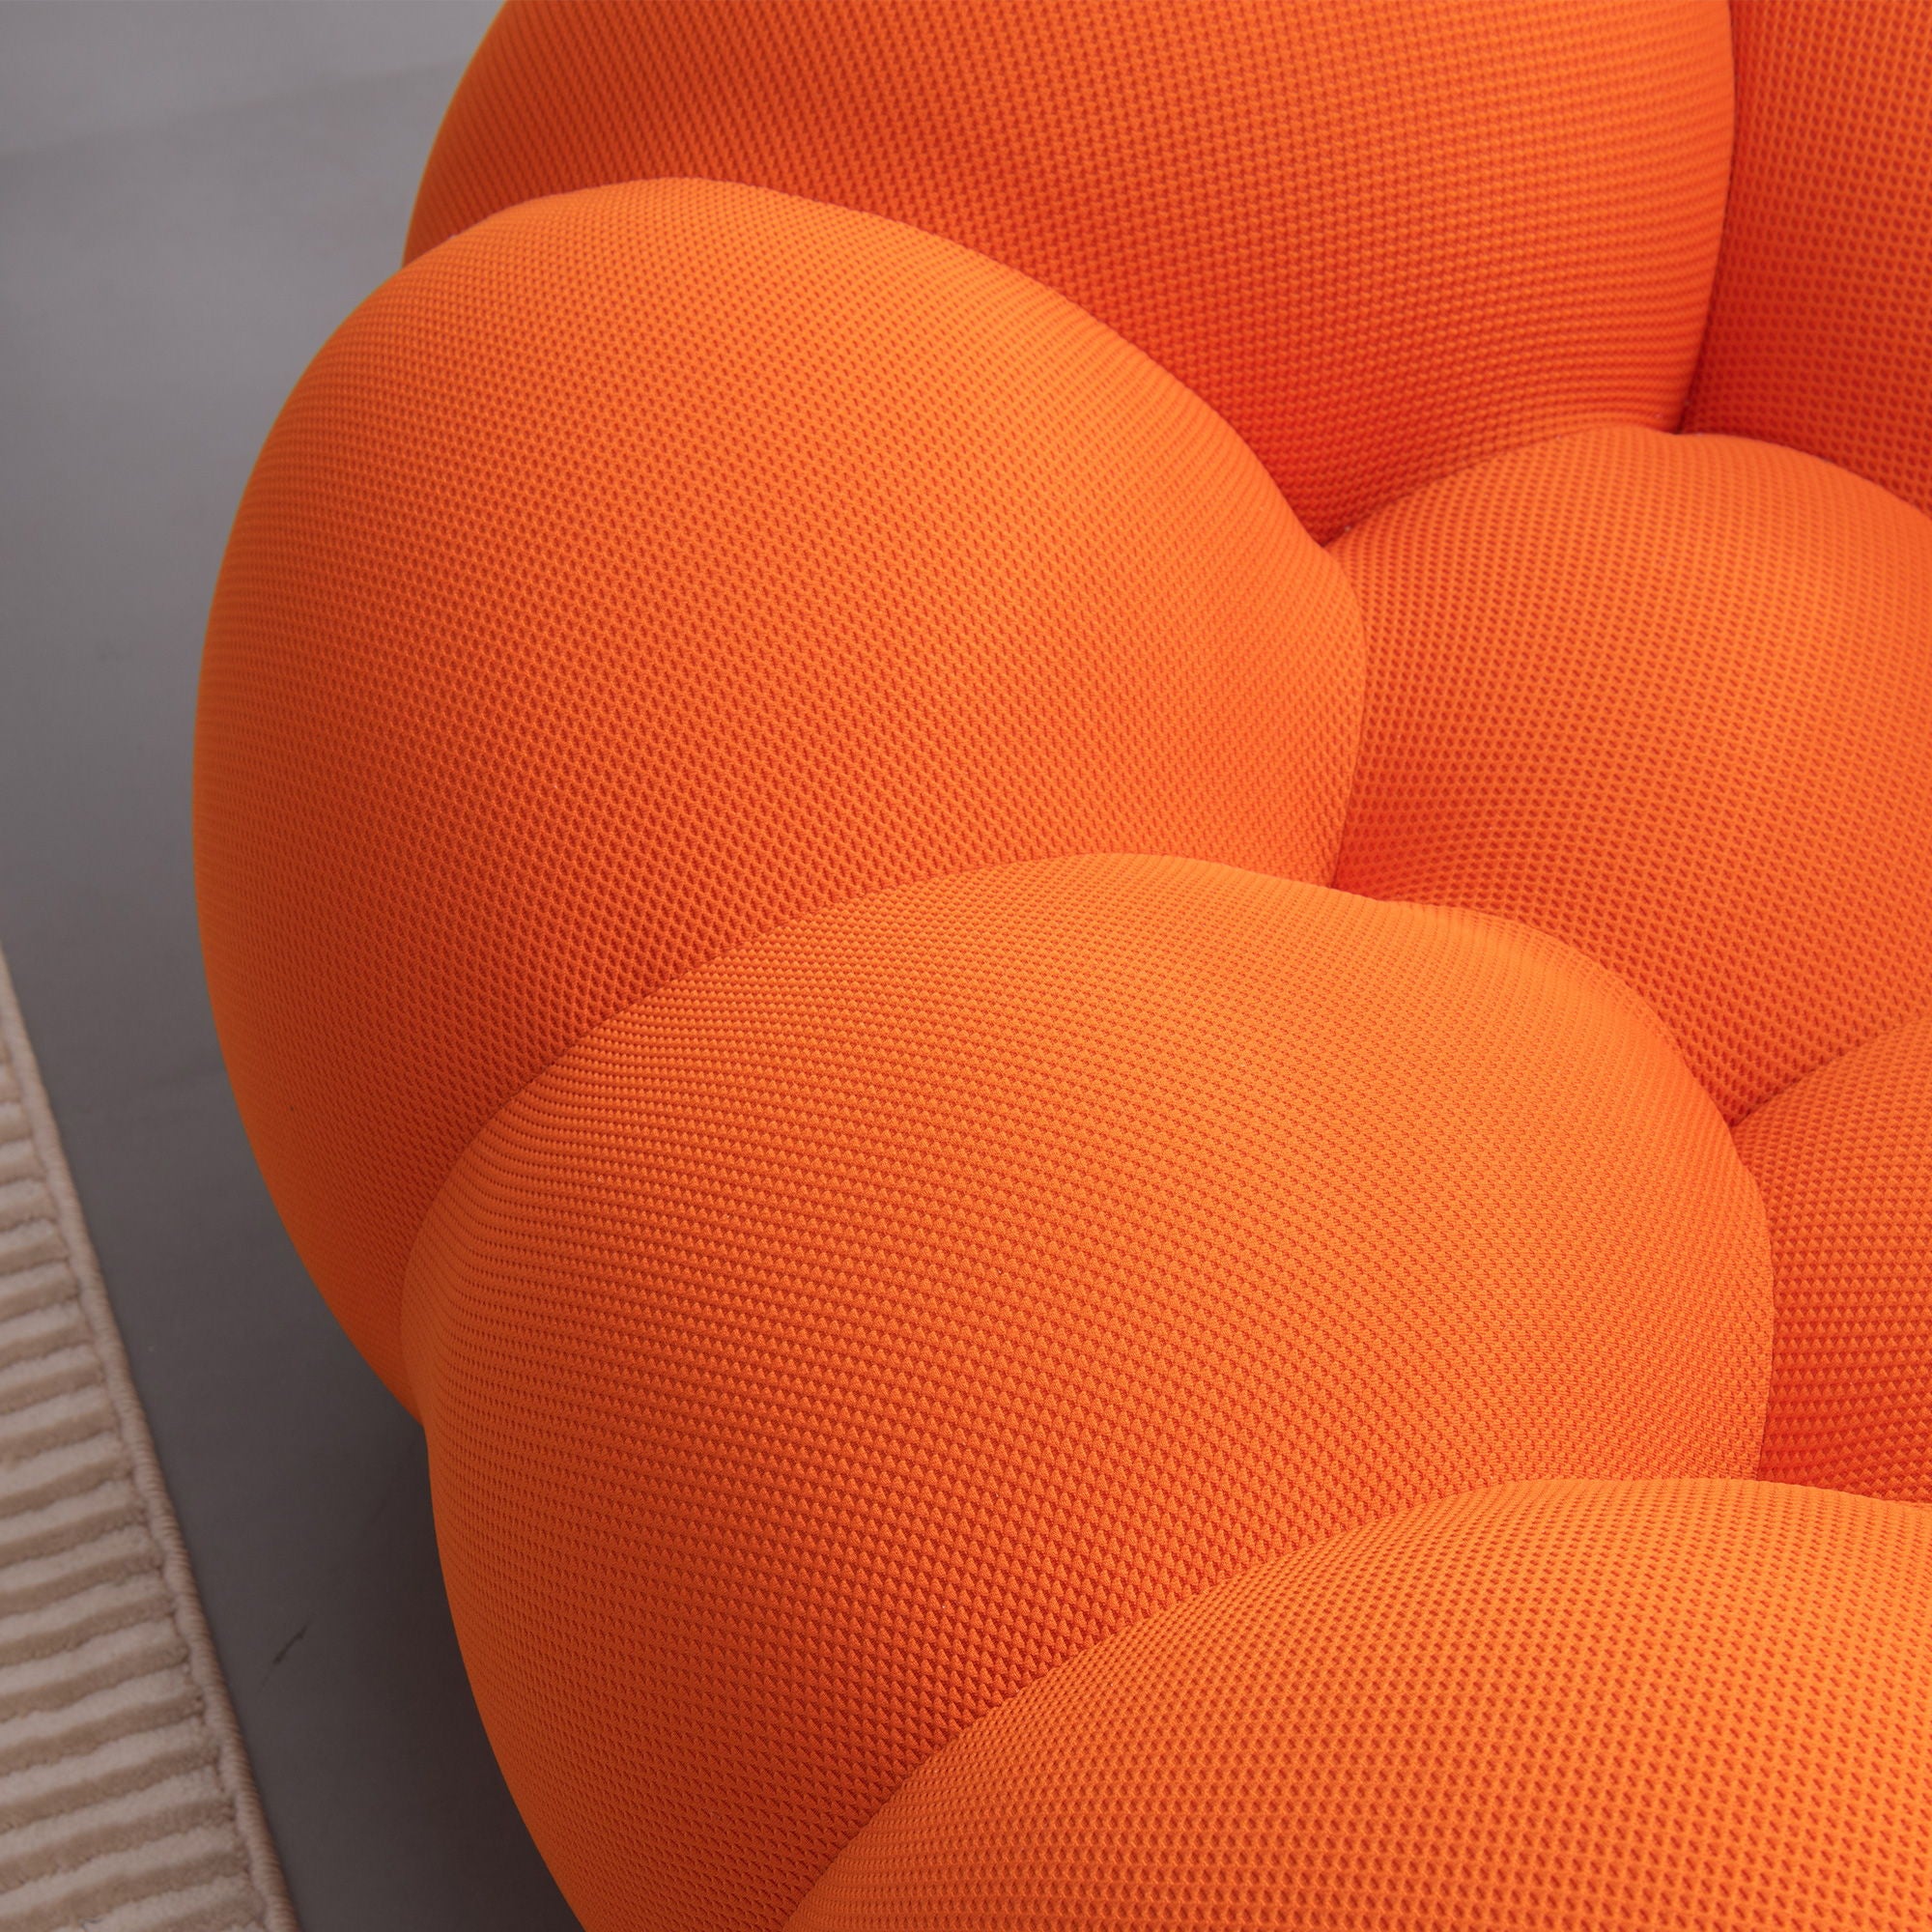 Modern Bubble Floor Couch For Living Room, Orange